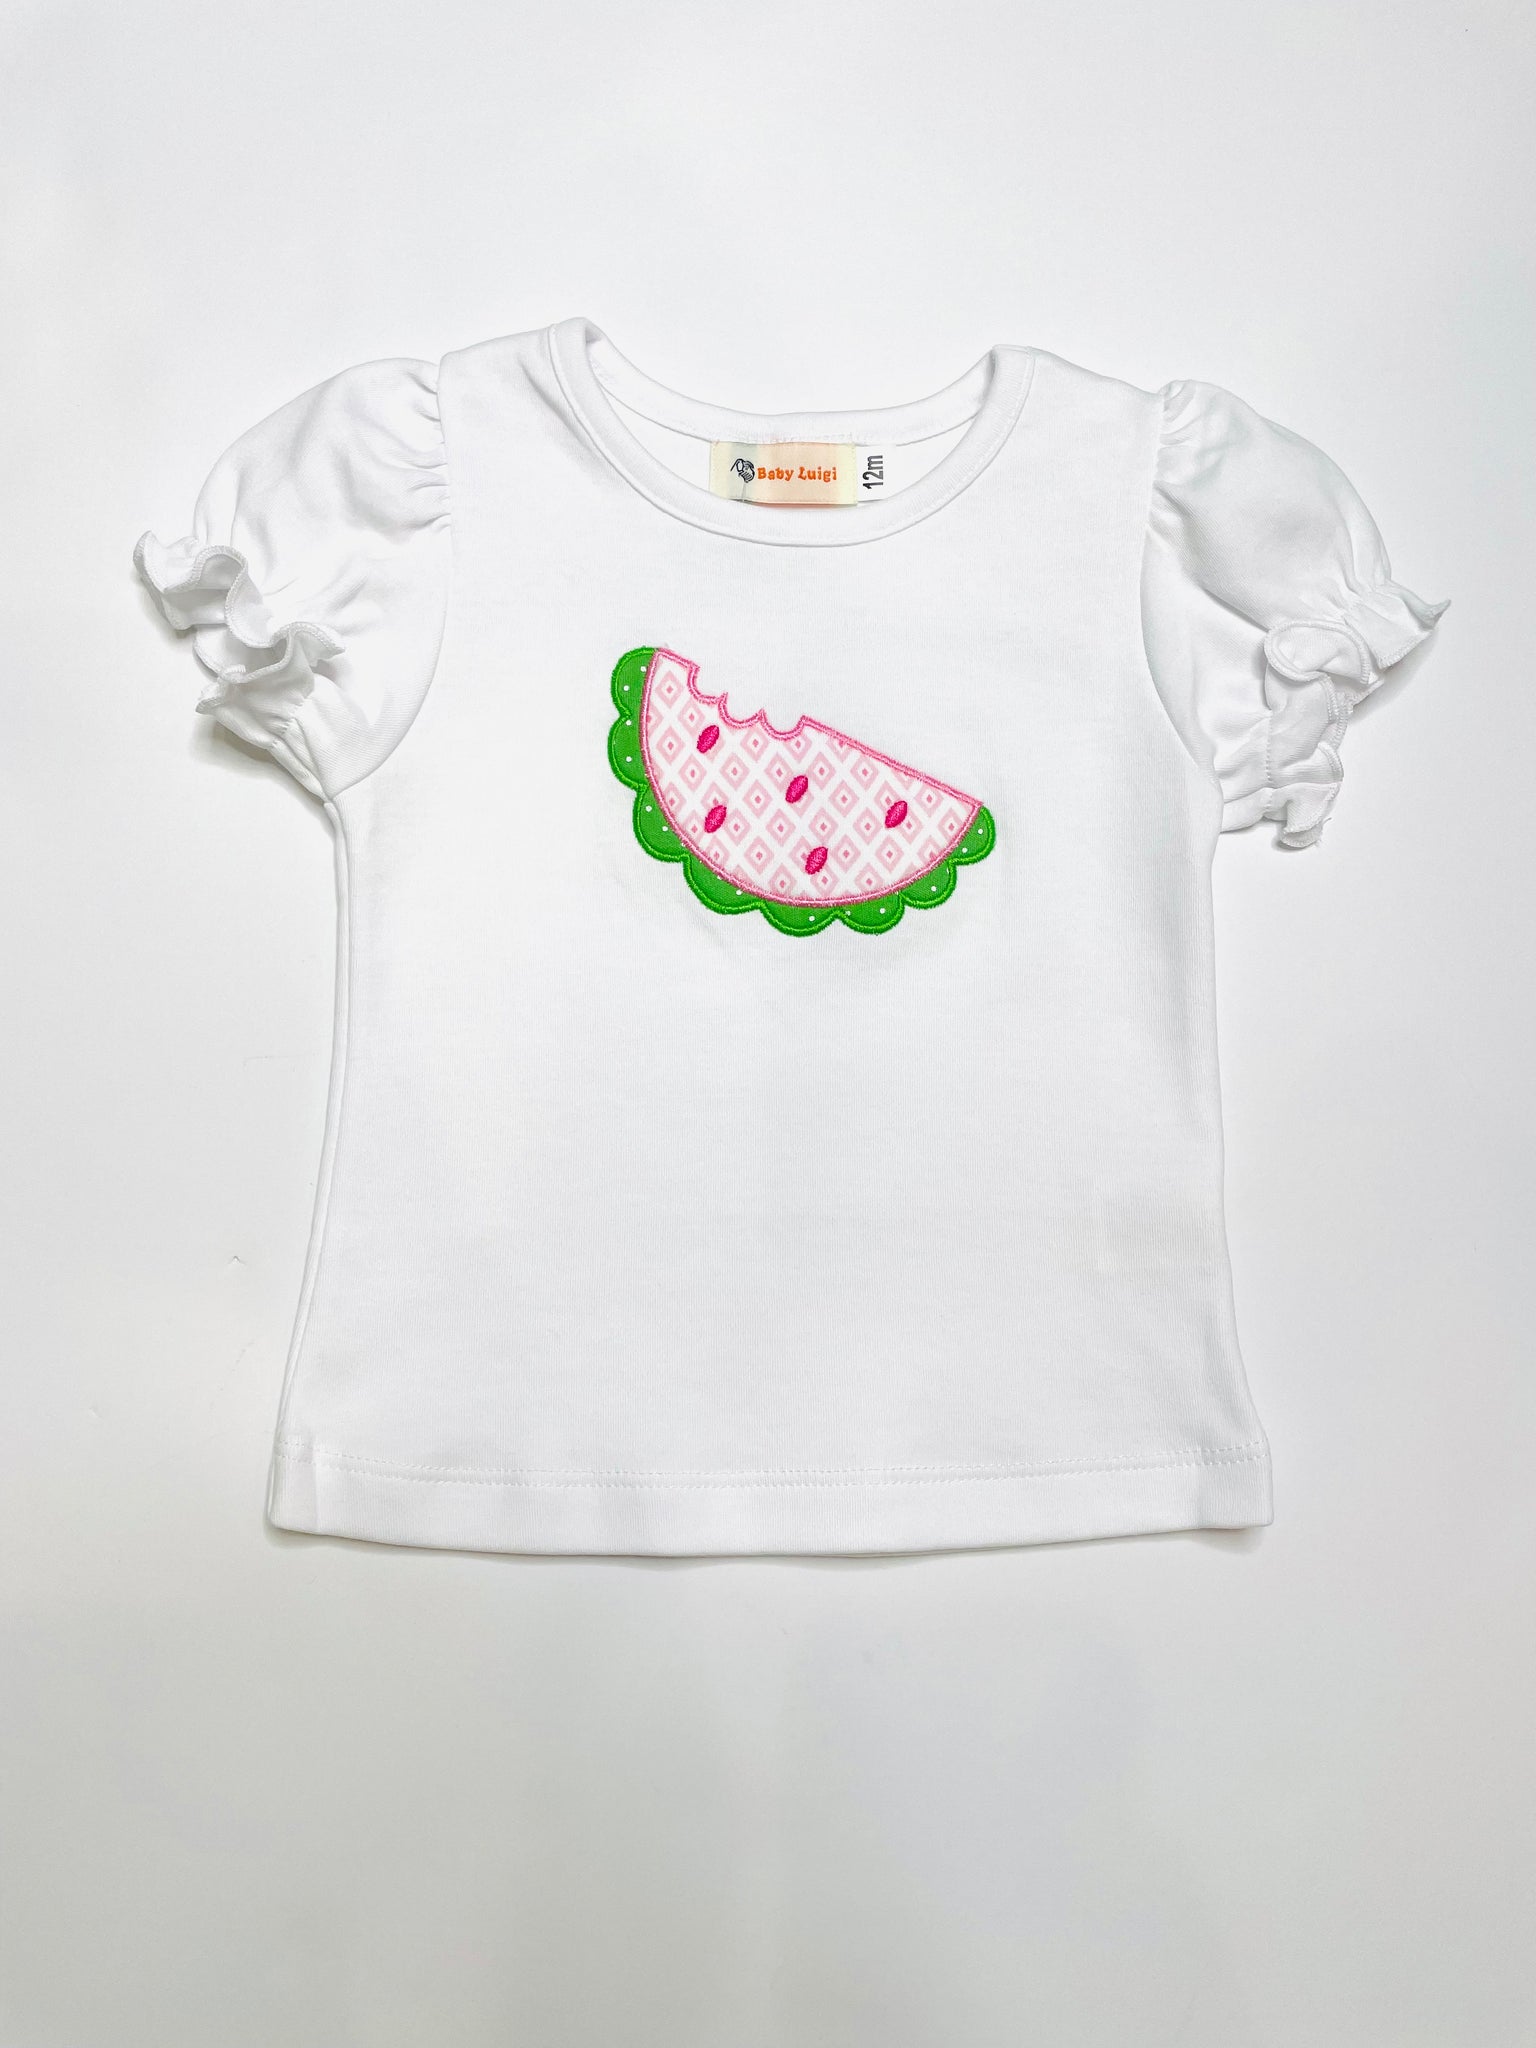 Watermelon Appliqué Shirt